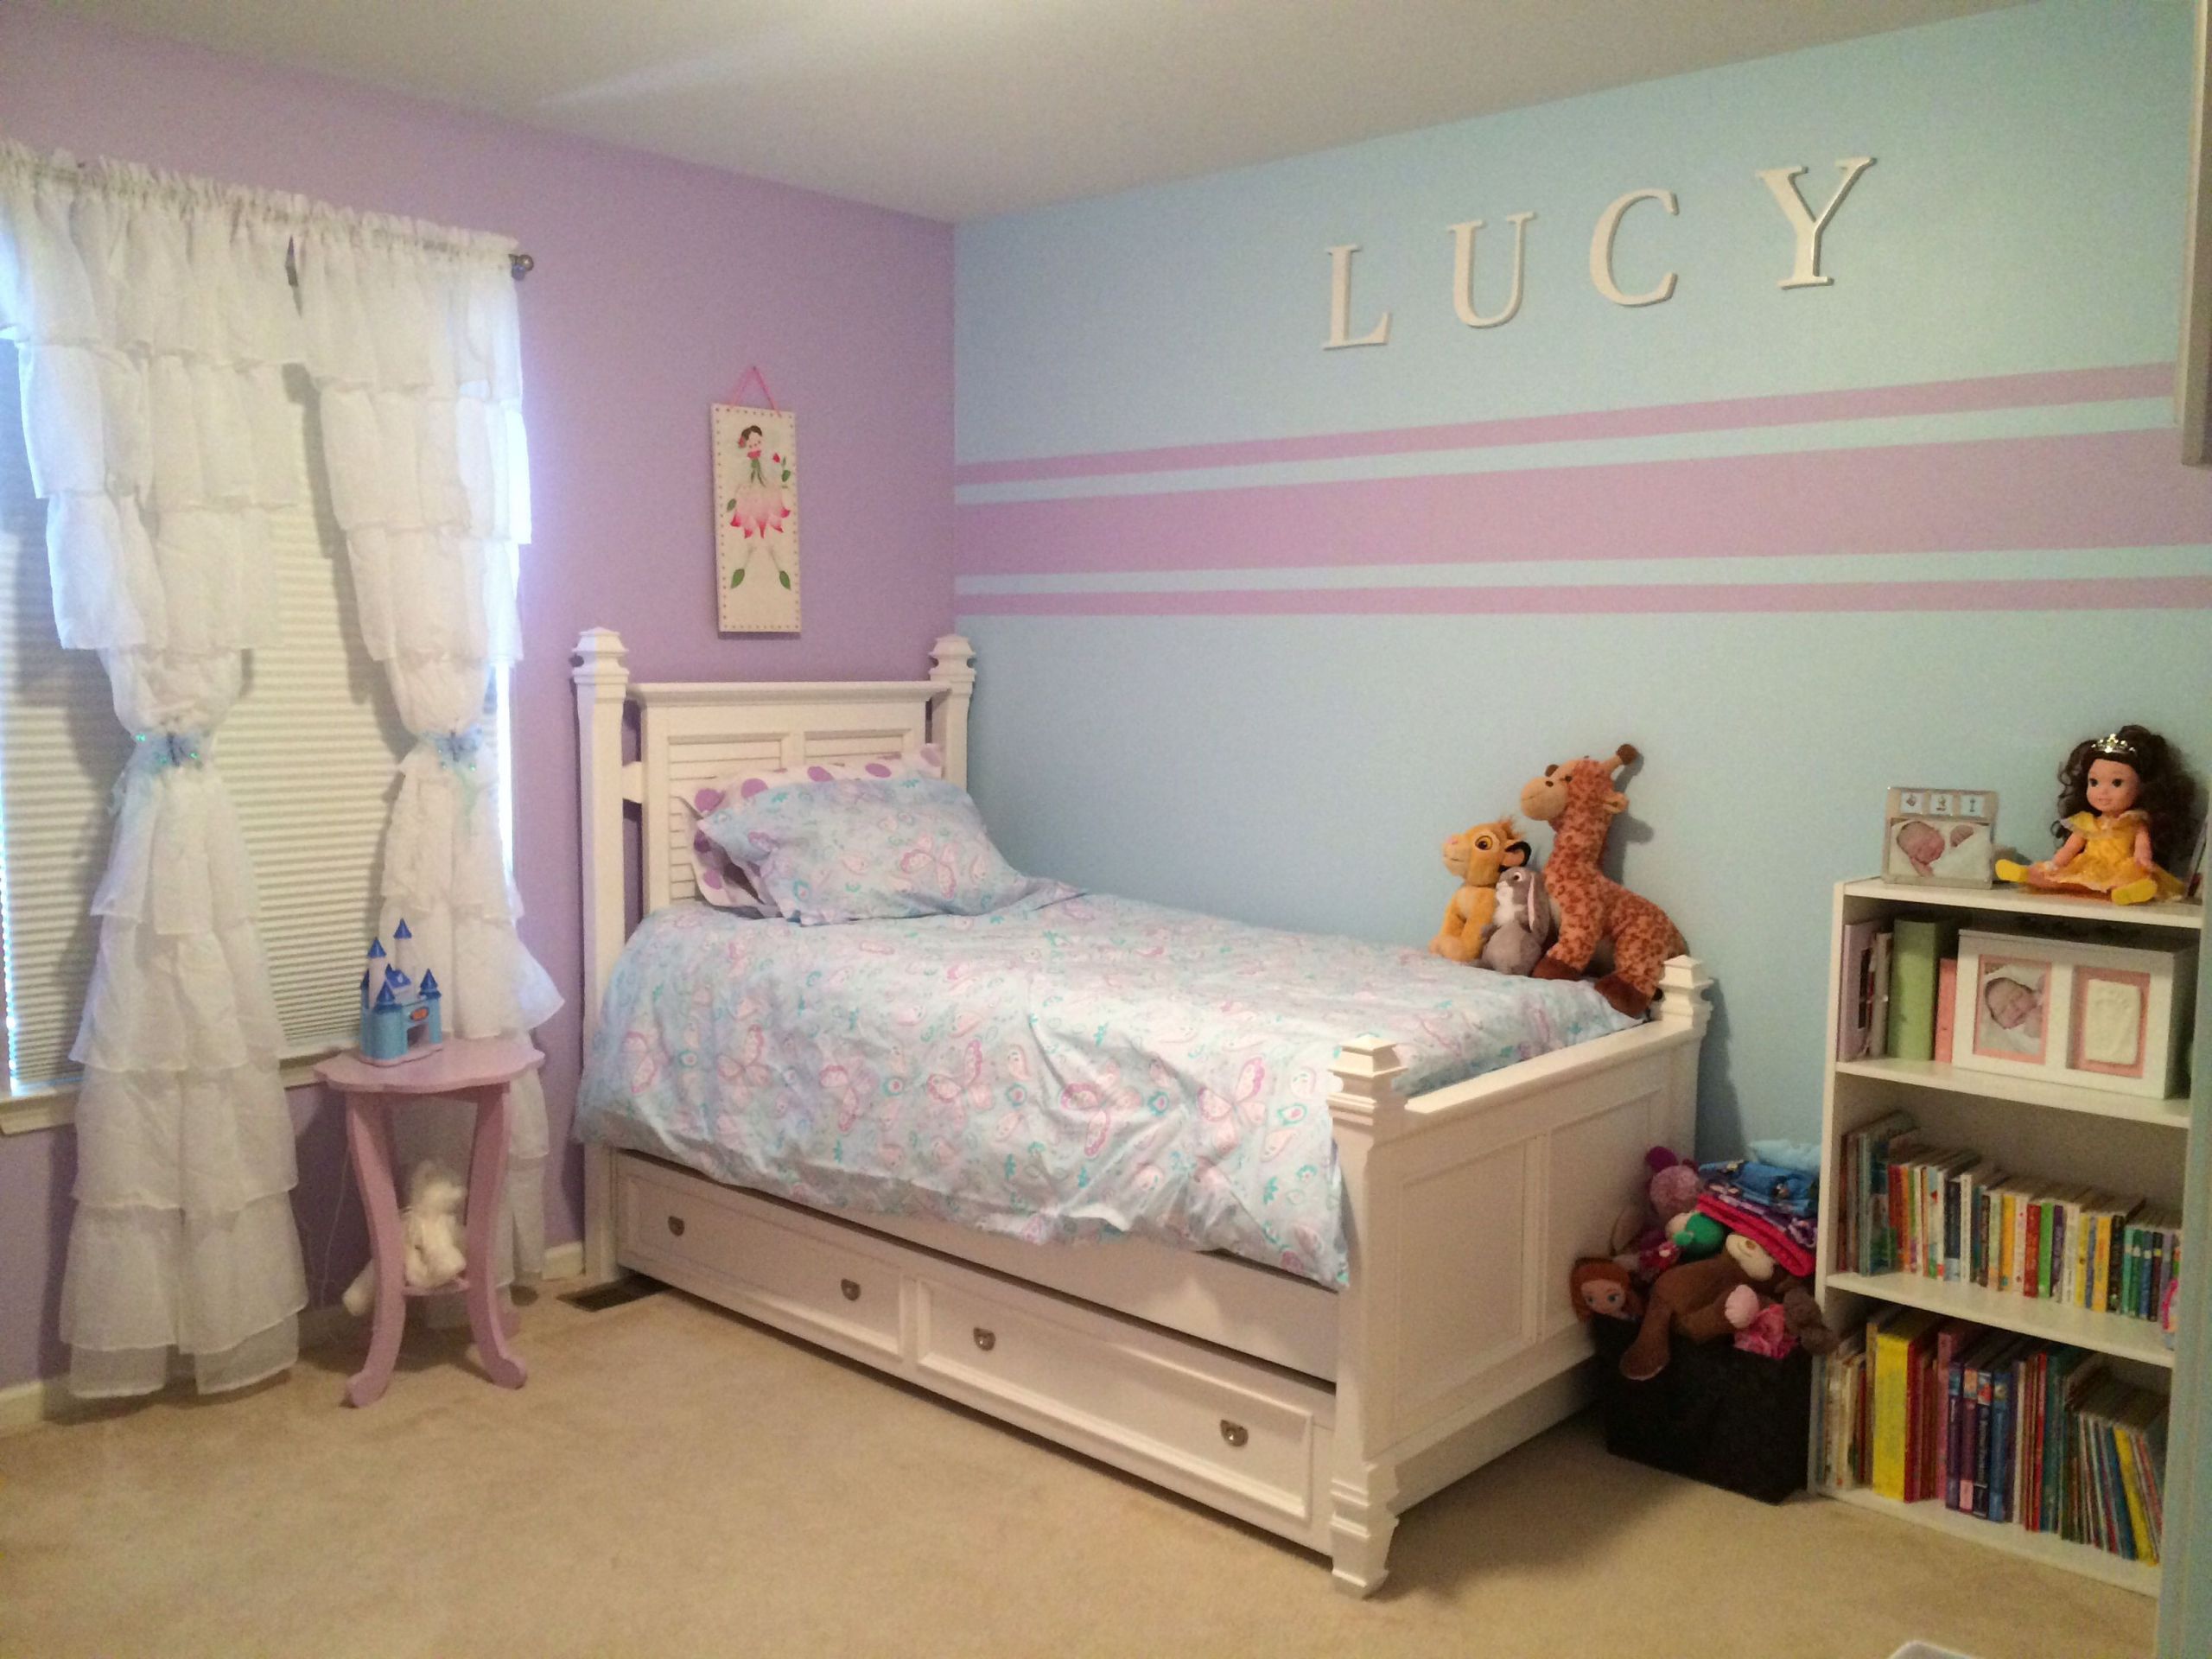 Kids Bedroom Paint Ideas For Walls
 Accent wall stripes for little girl room Kristin duvet